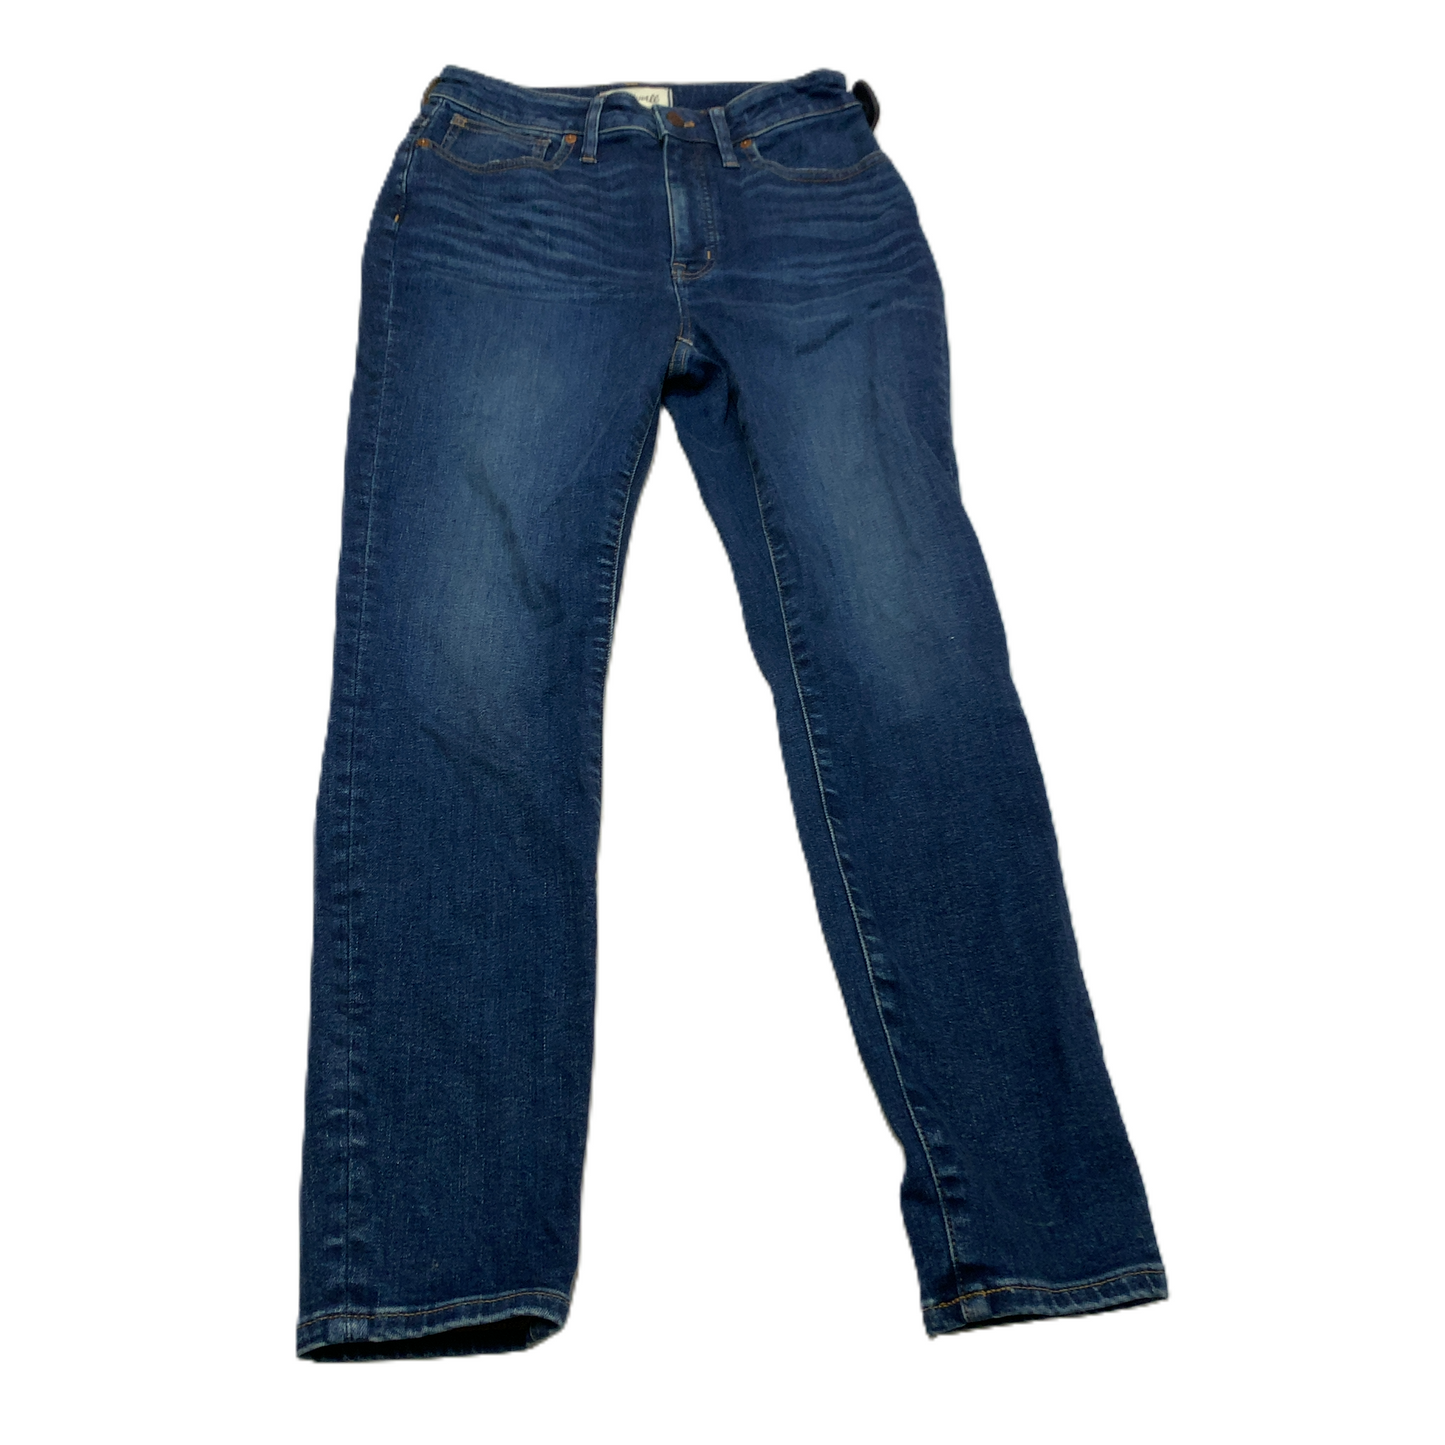 Blue Denim  Jeans Skinny By Madewell  Size: 6